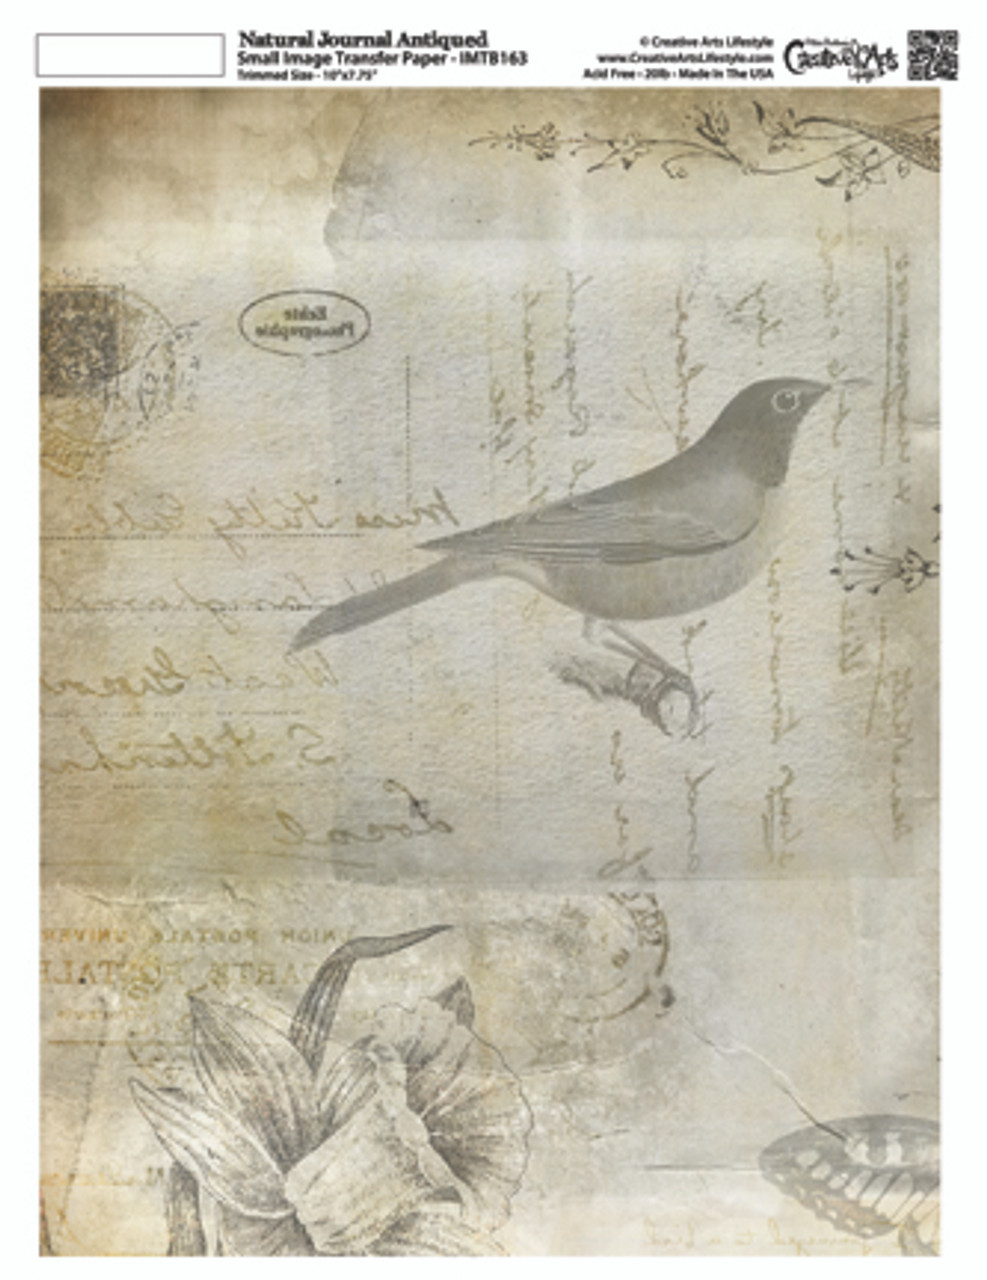 Natural Journal-Antiqued 8x10 -Image Transfer